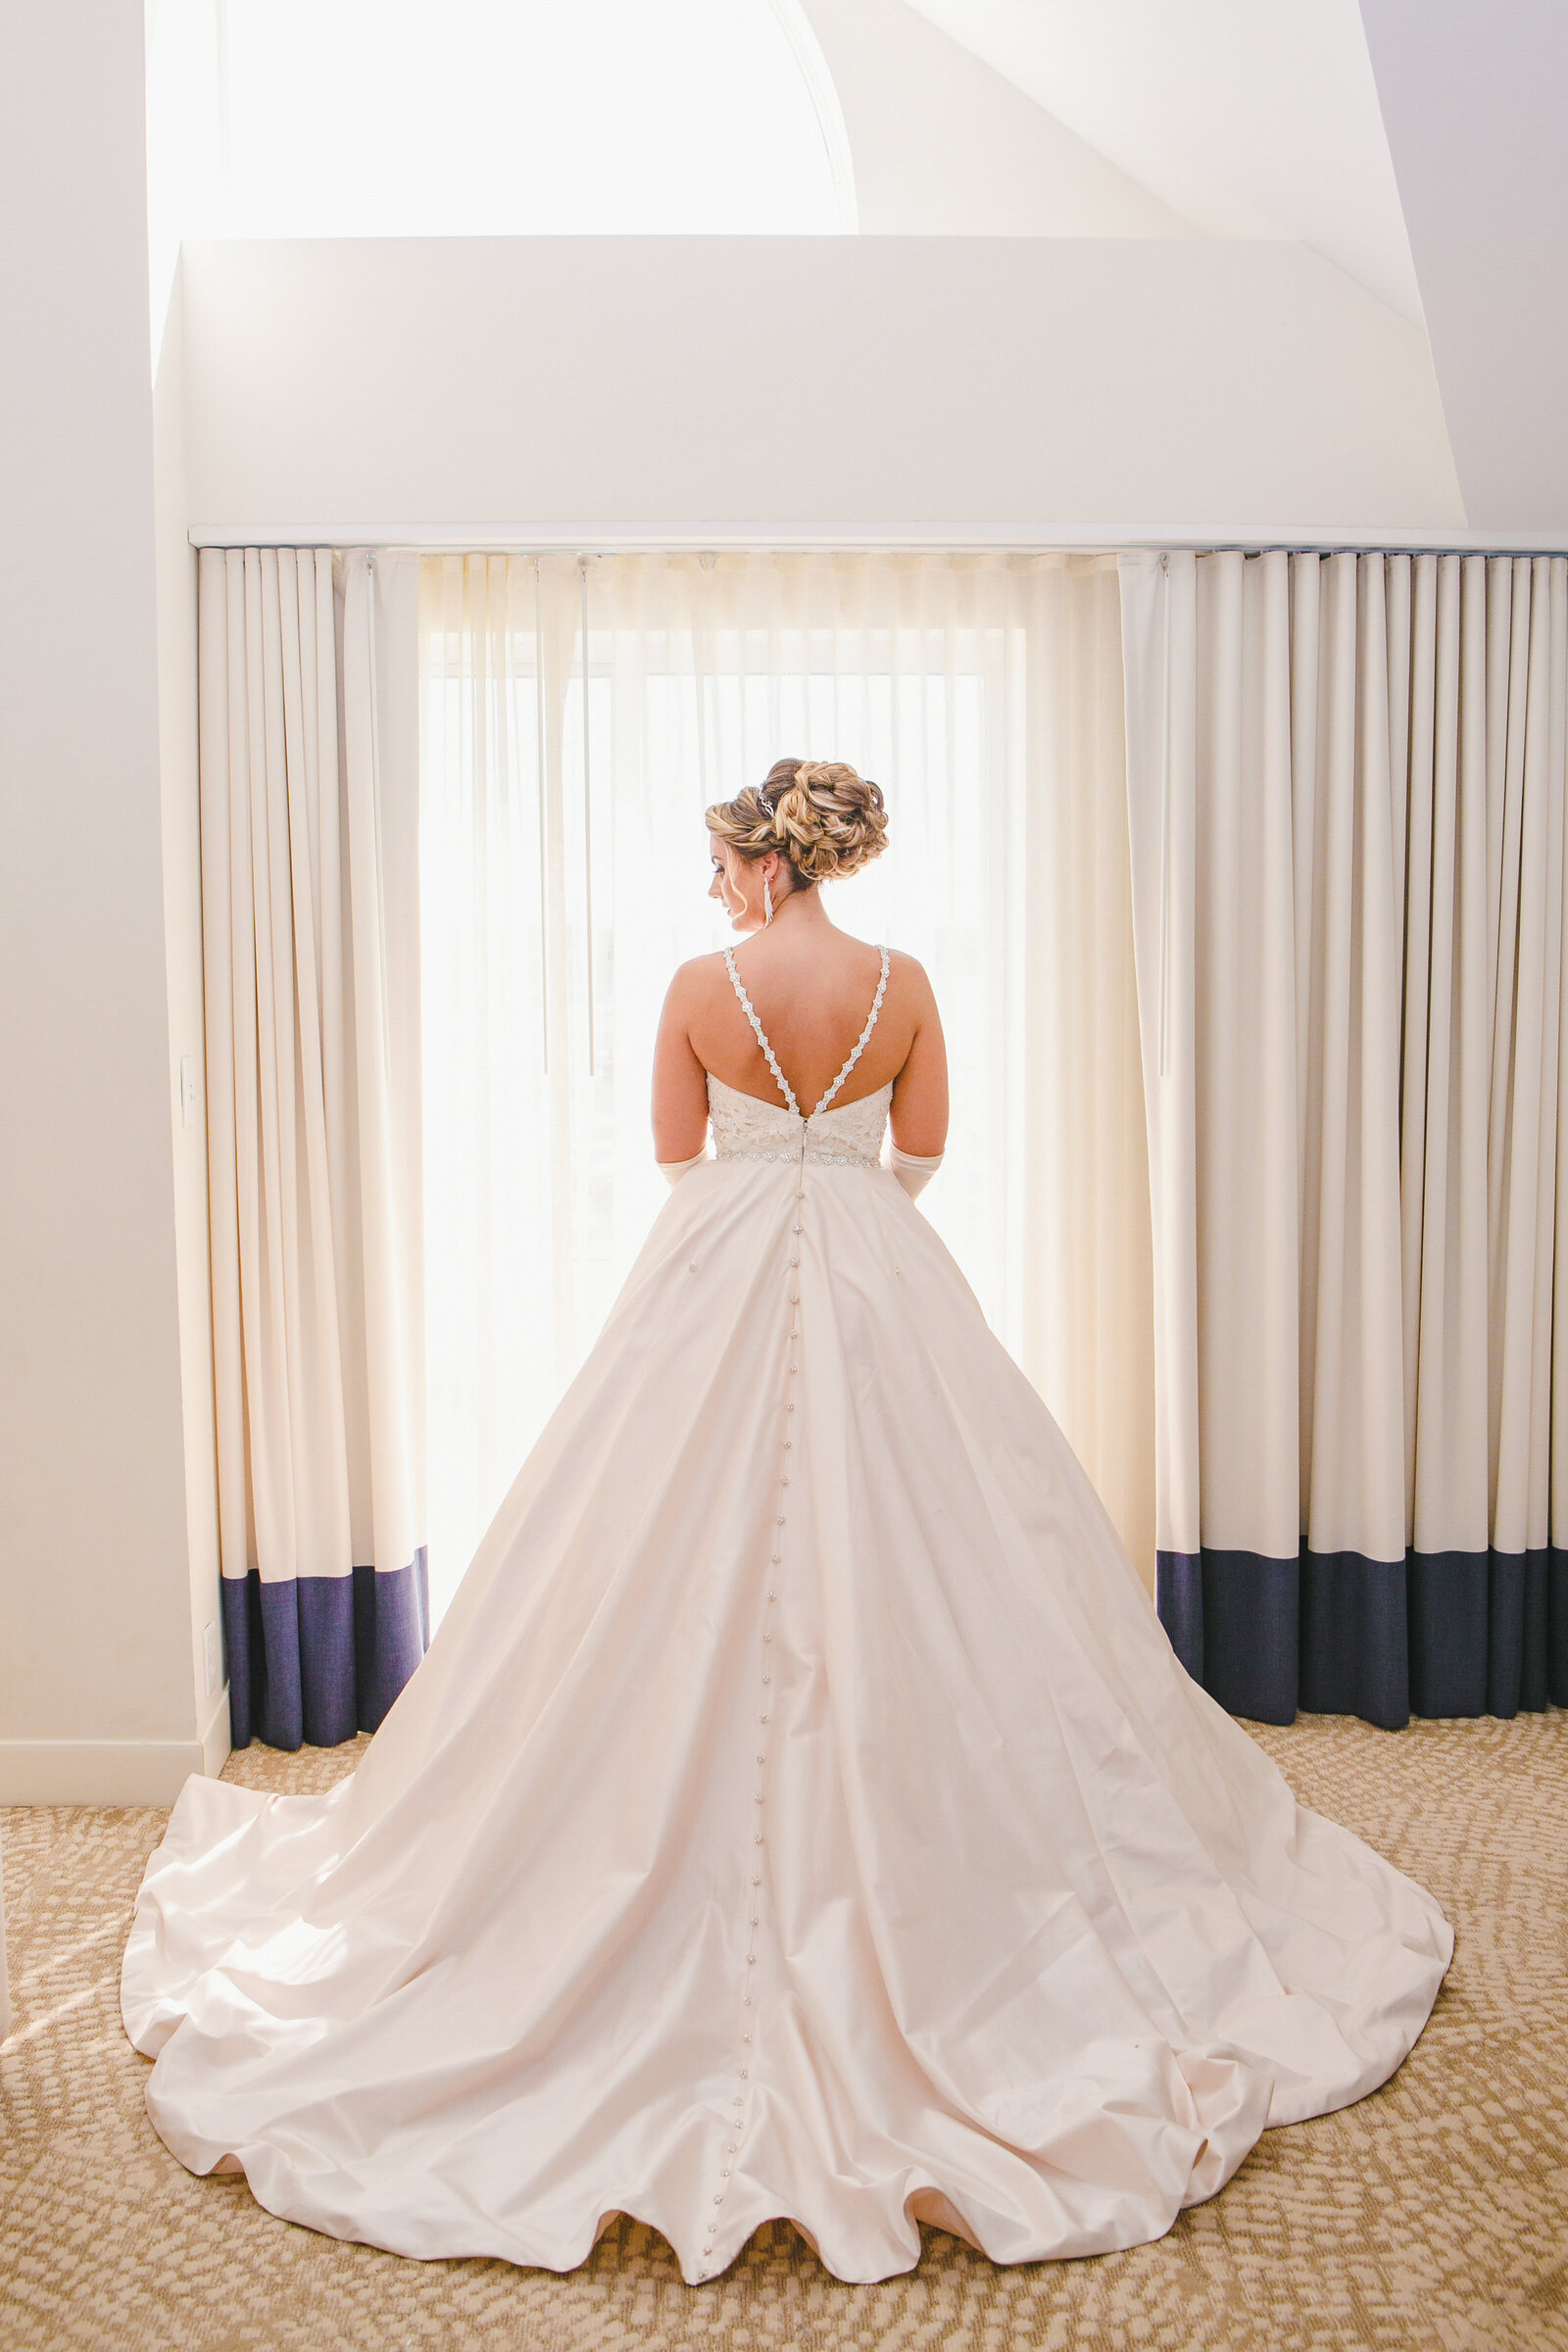 New-England-Wedding-Photographer-Sabrina-Scolari-21